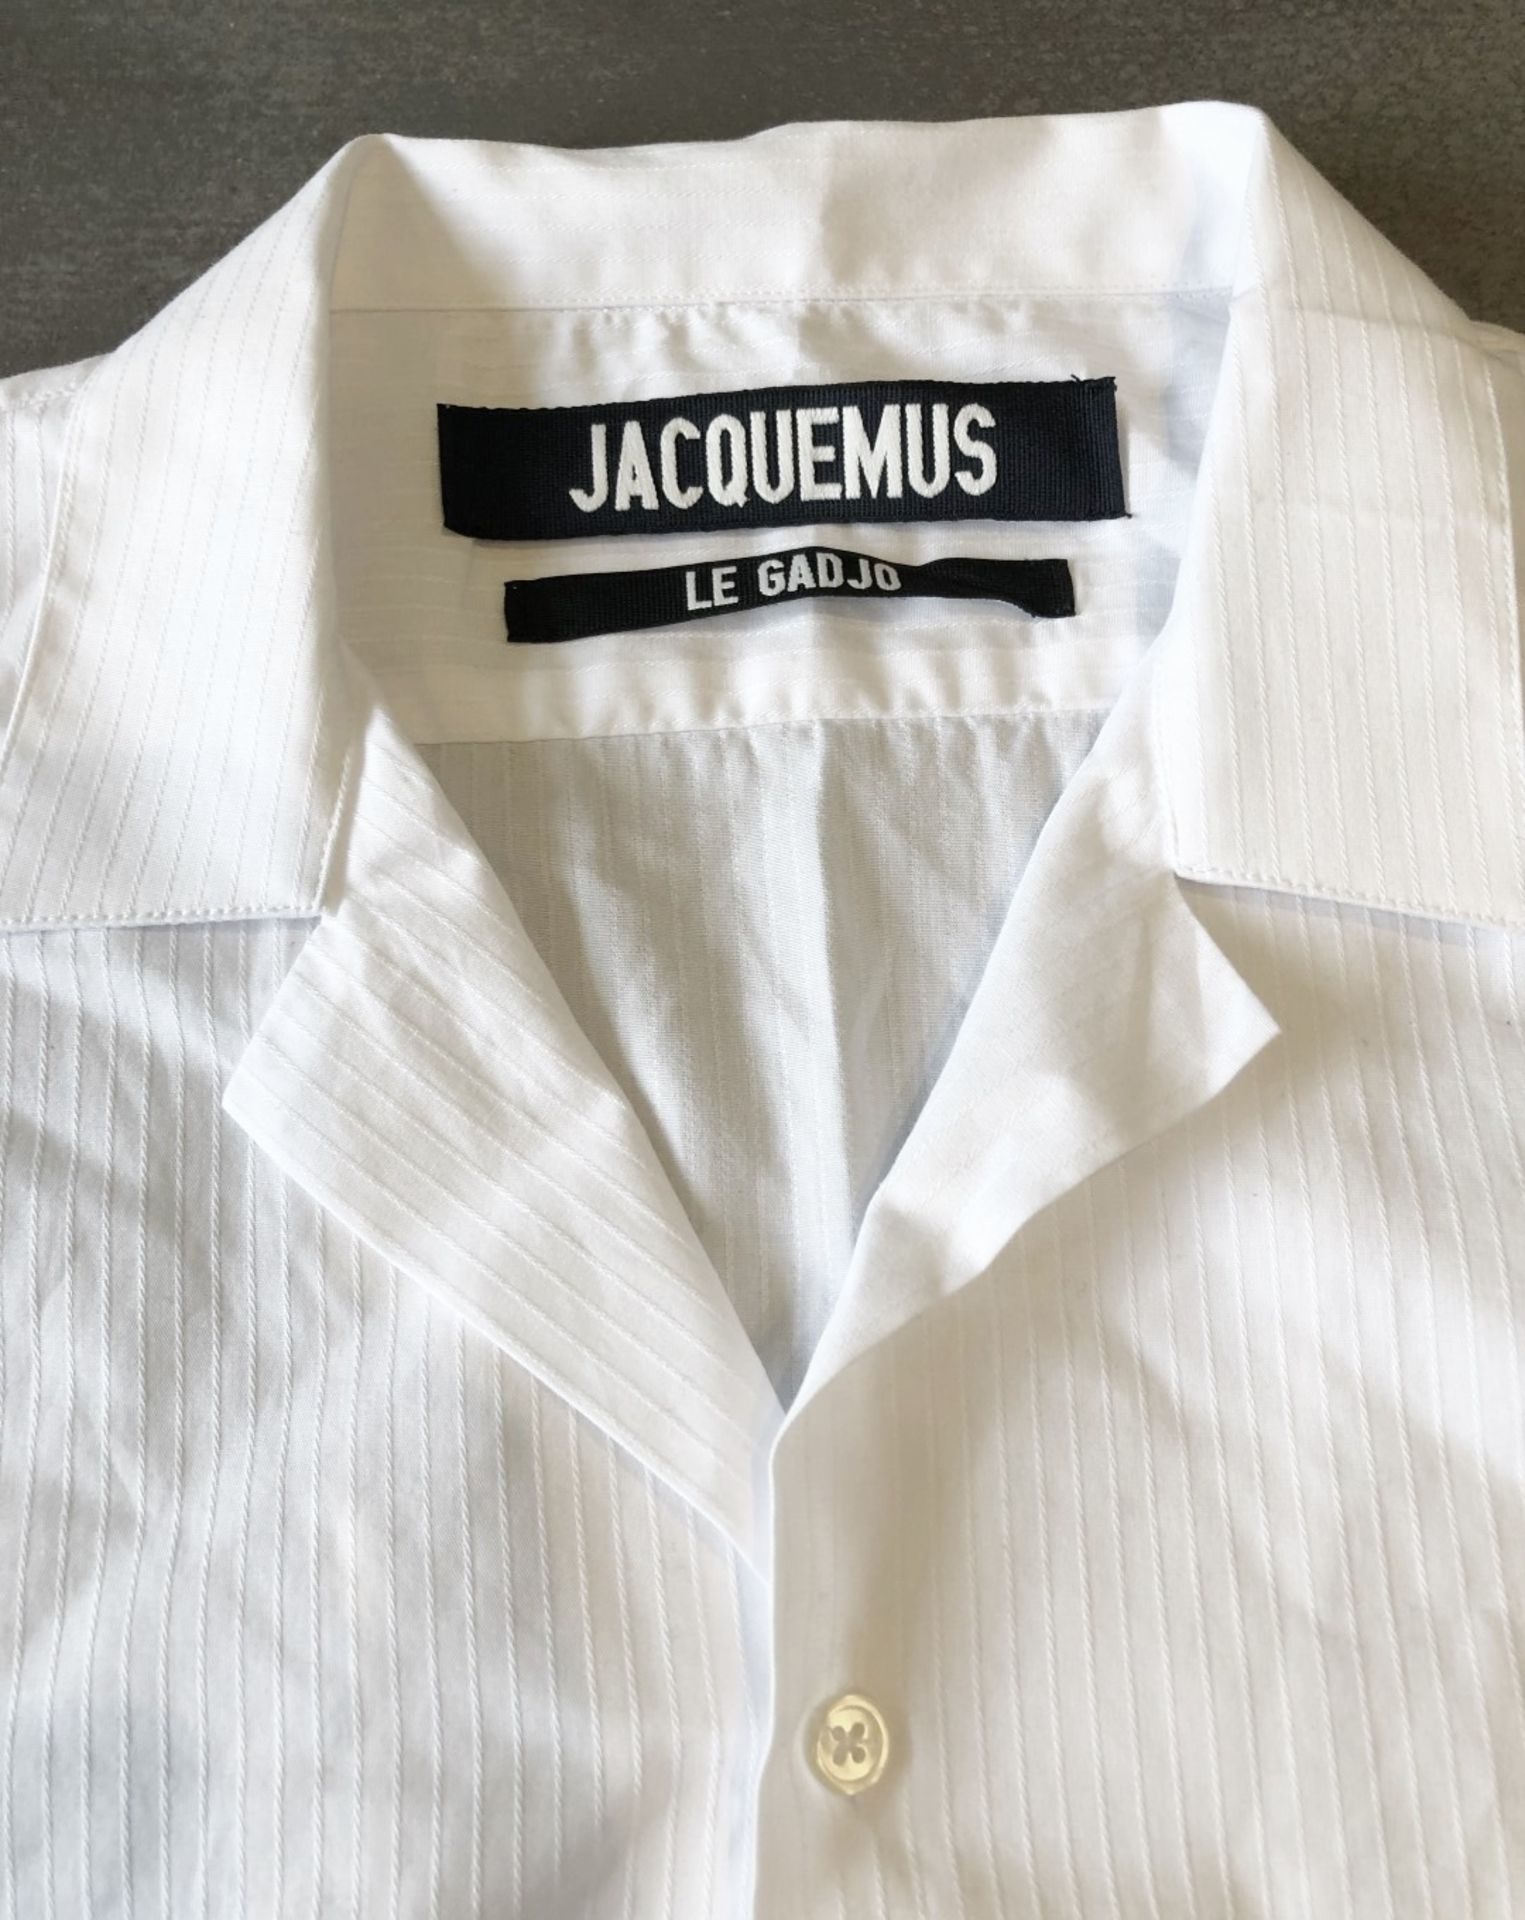 1 x Men's Genuine Jaquemus Designer Short Sleeve Shirt In White - Size: LARGE - RRP £250.00 - Image 3 of 7